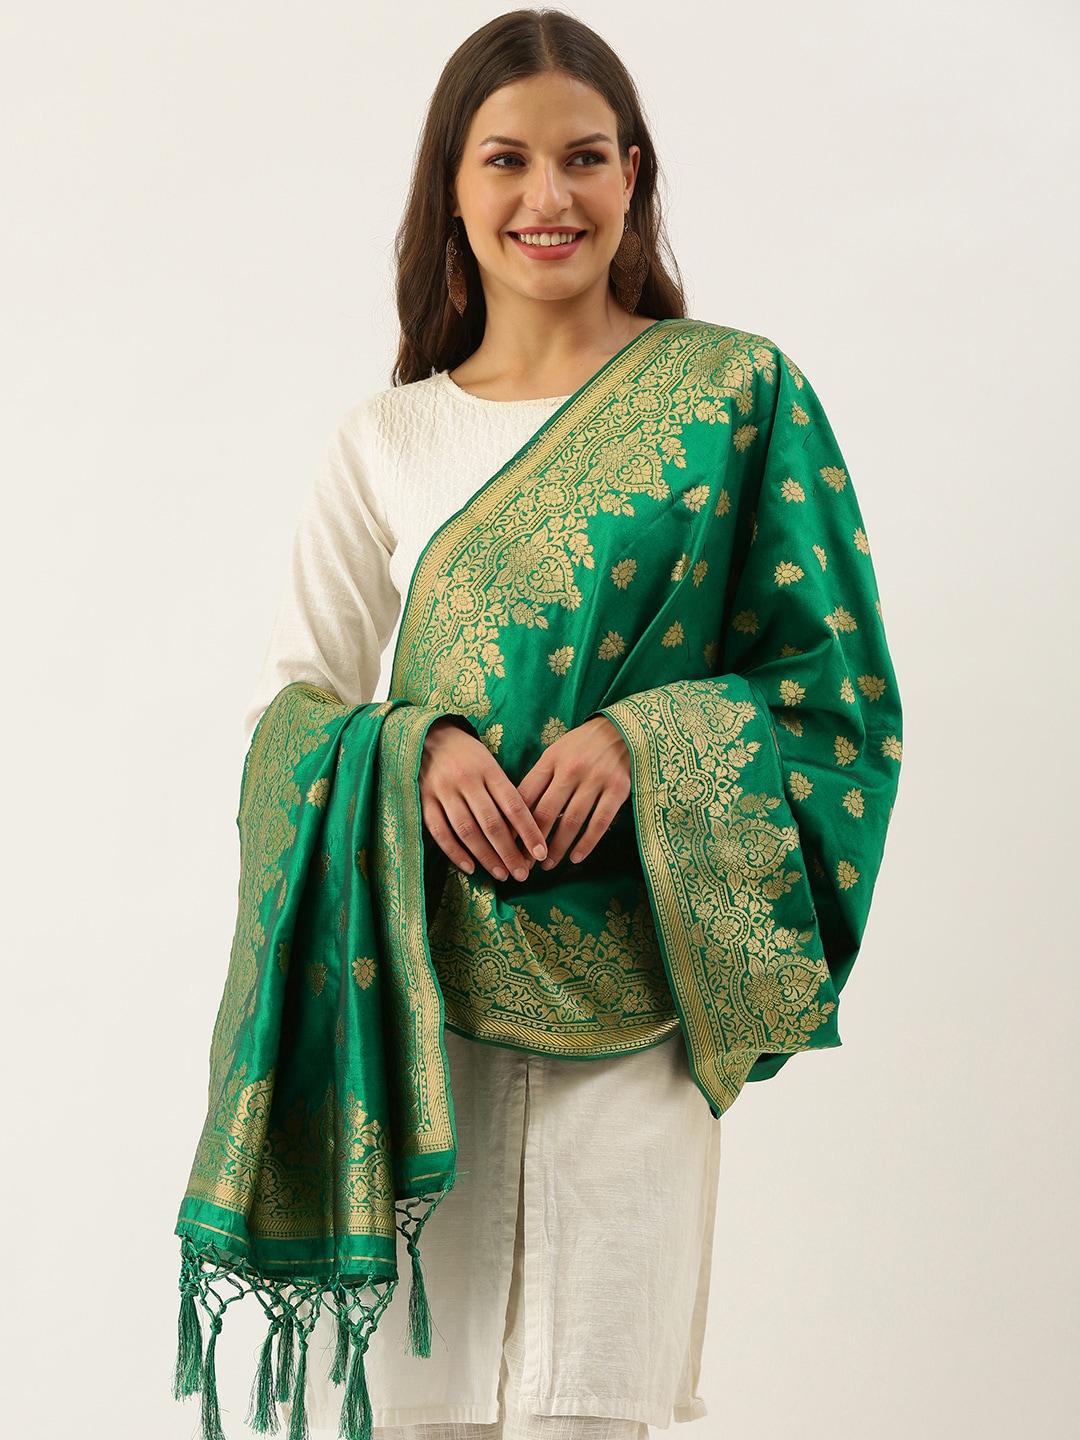 sangam-prints-green-&-golden-ethnic-motifs-woven-design-dupatta-with-tassel-border